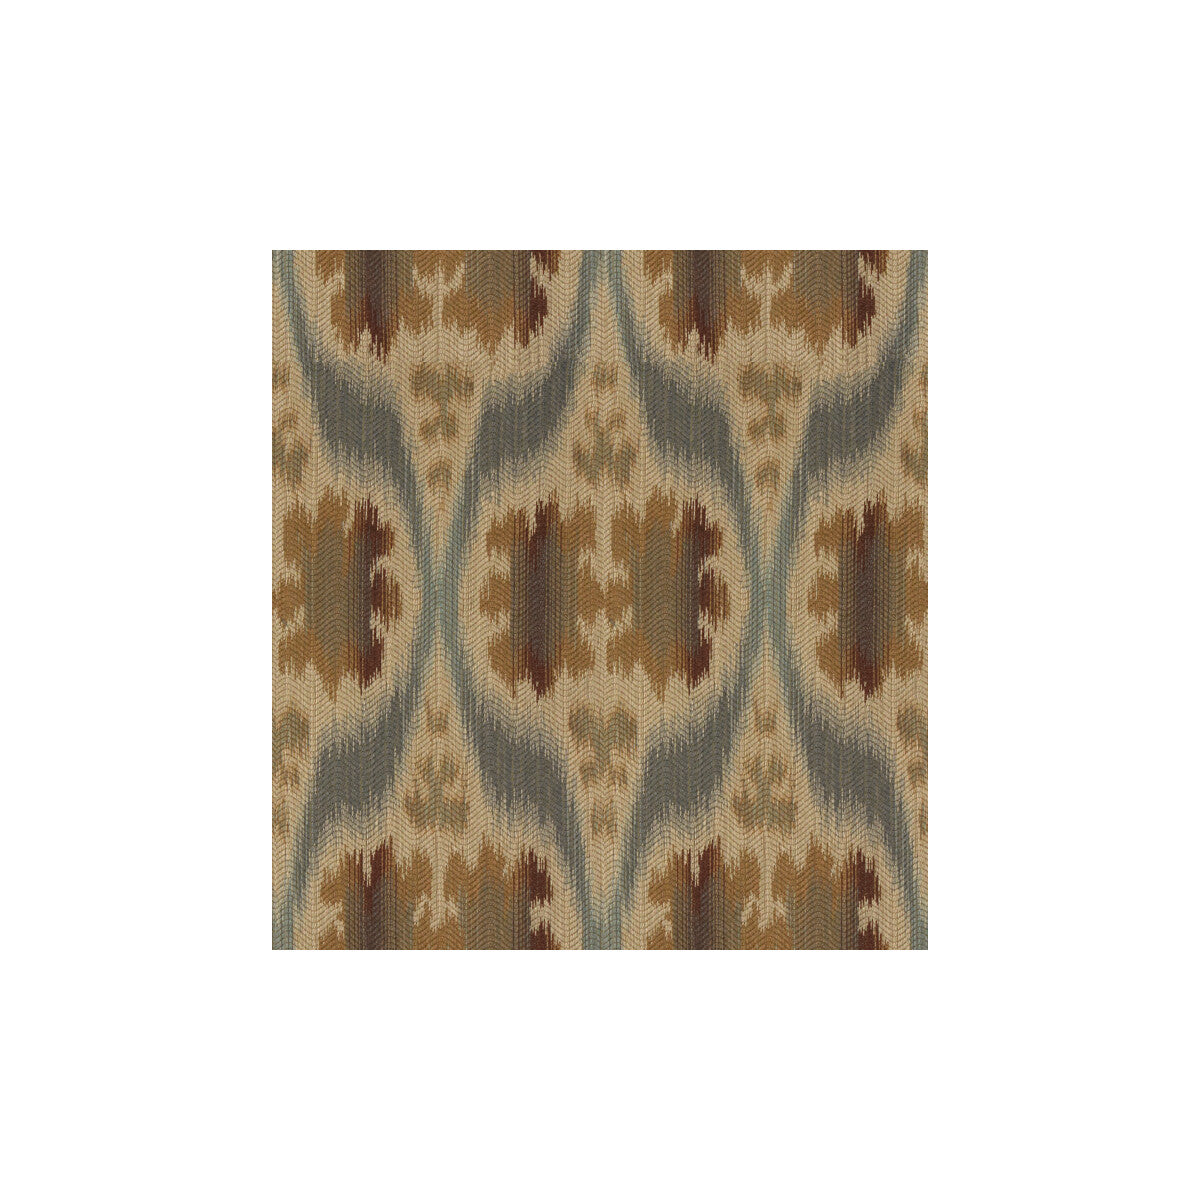 Kravet Design fabric in 32548-516 color - pattern 32548.516.0 - by Kravet Design in the Gis collection